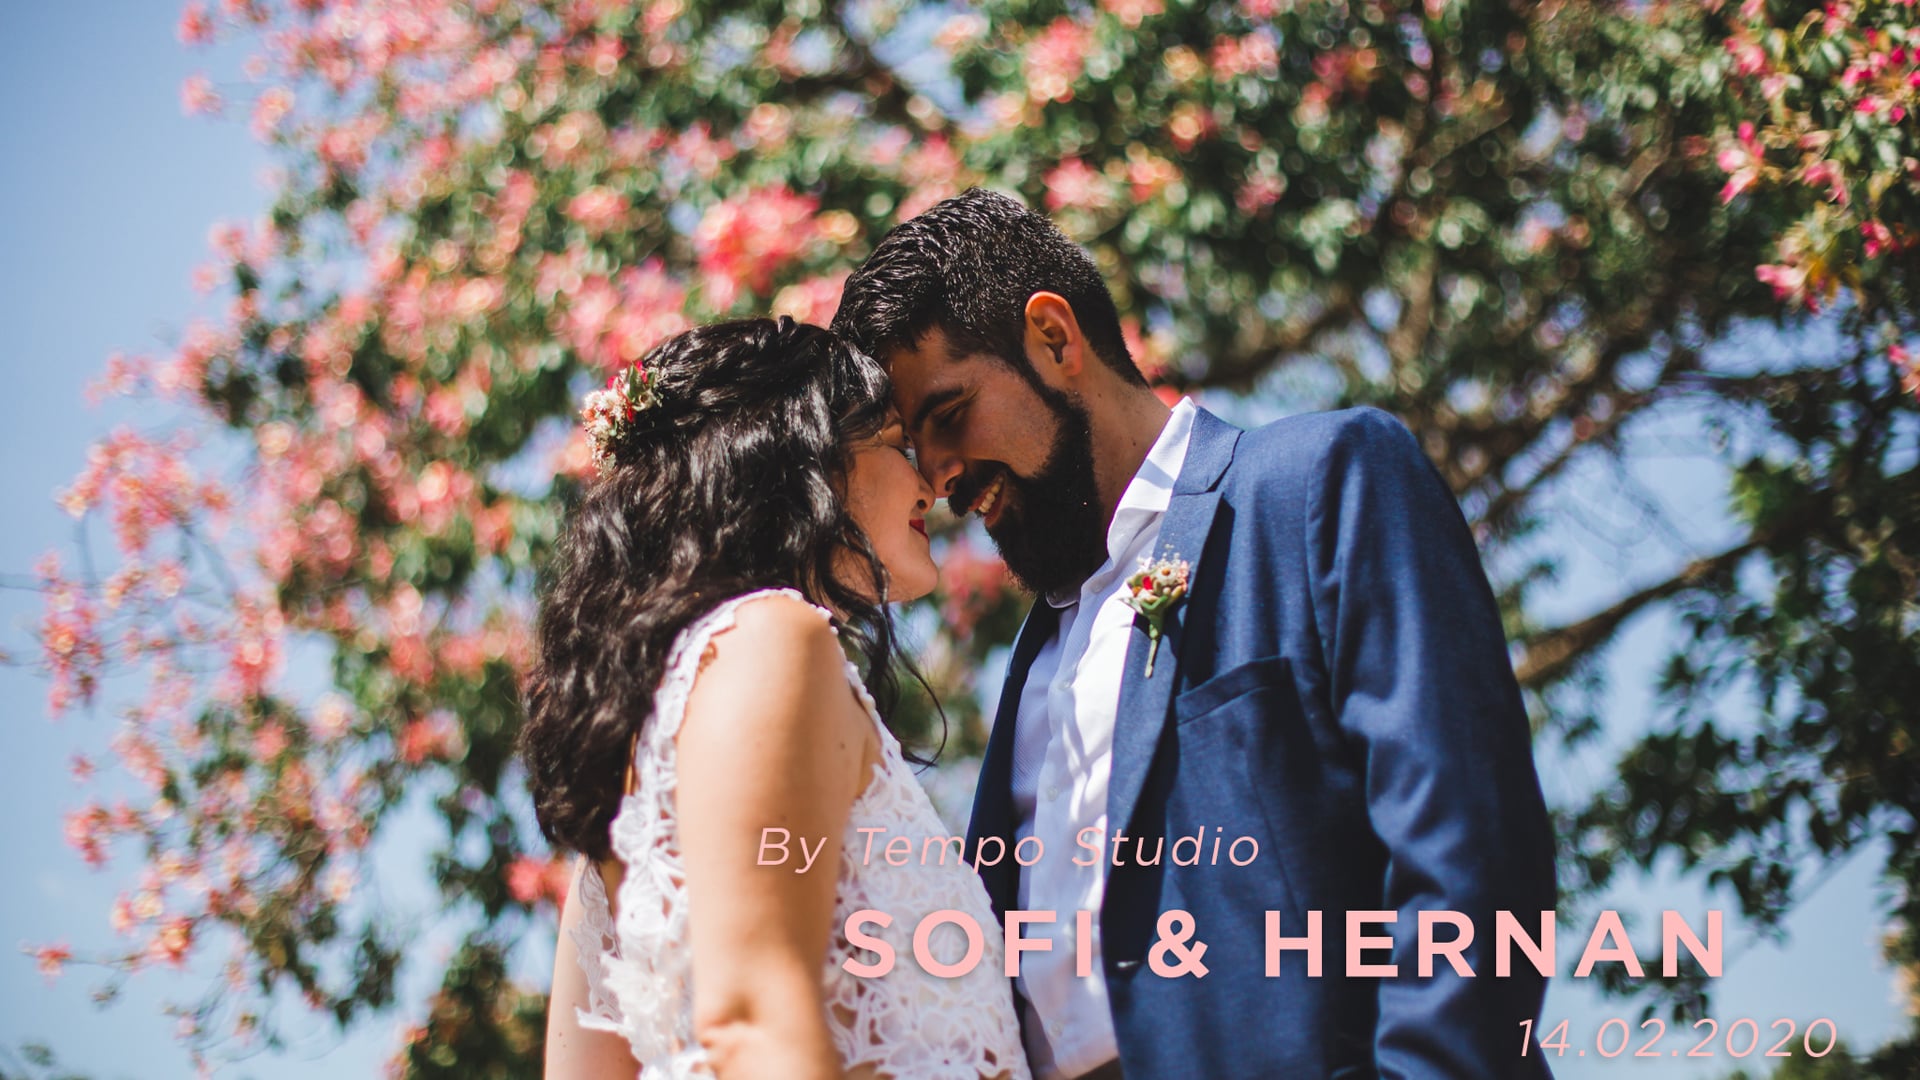 Sofi & Hernan | Resumen completo